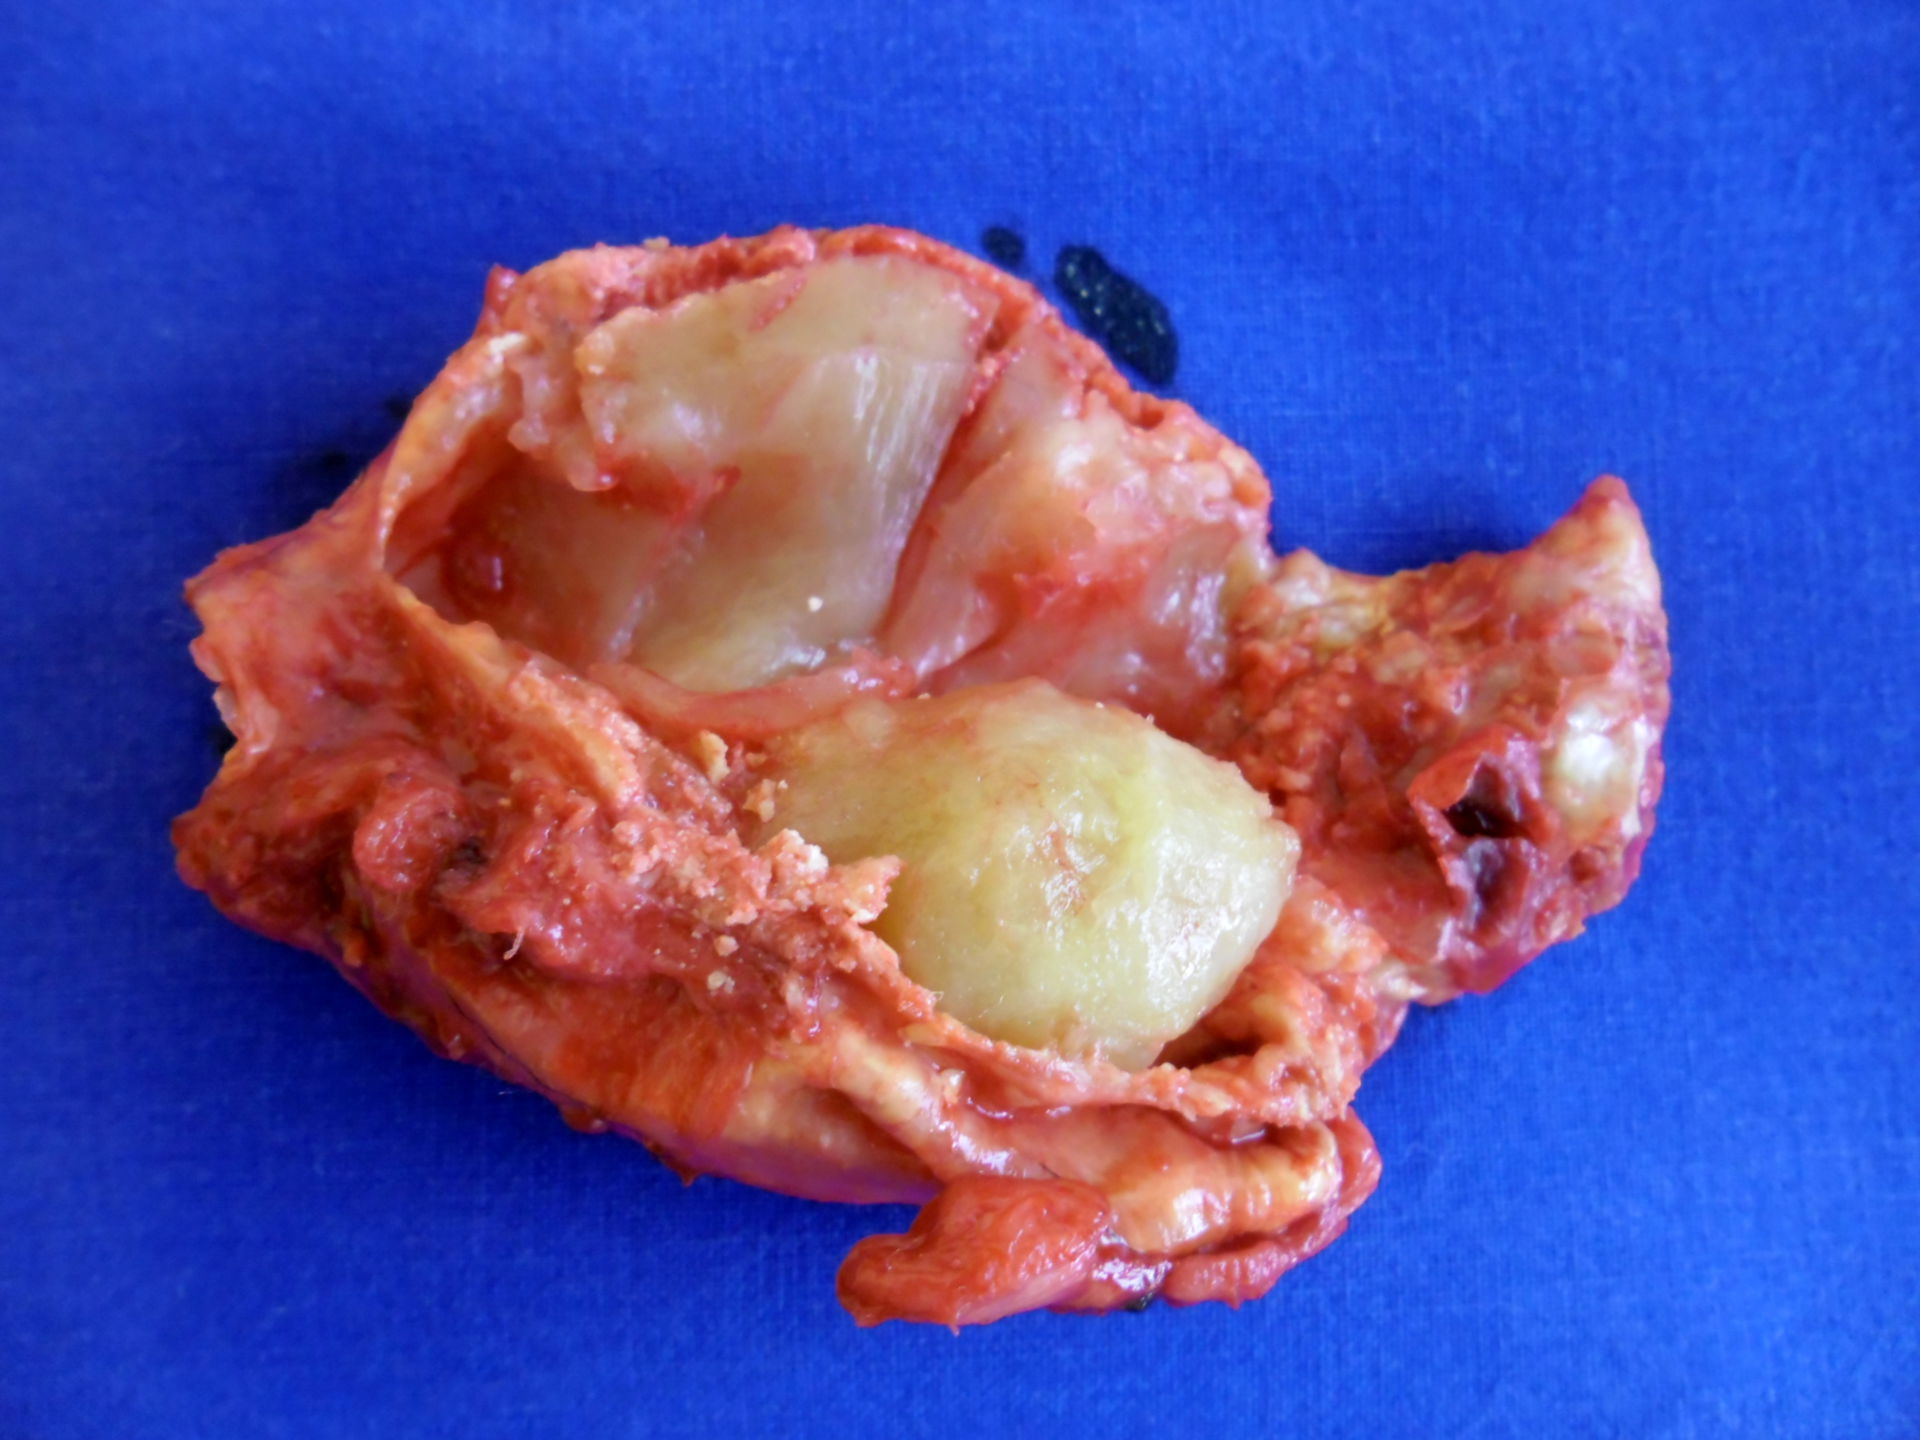 Plaque of the carotid artery